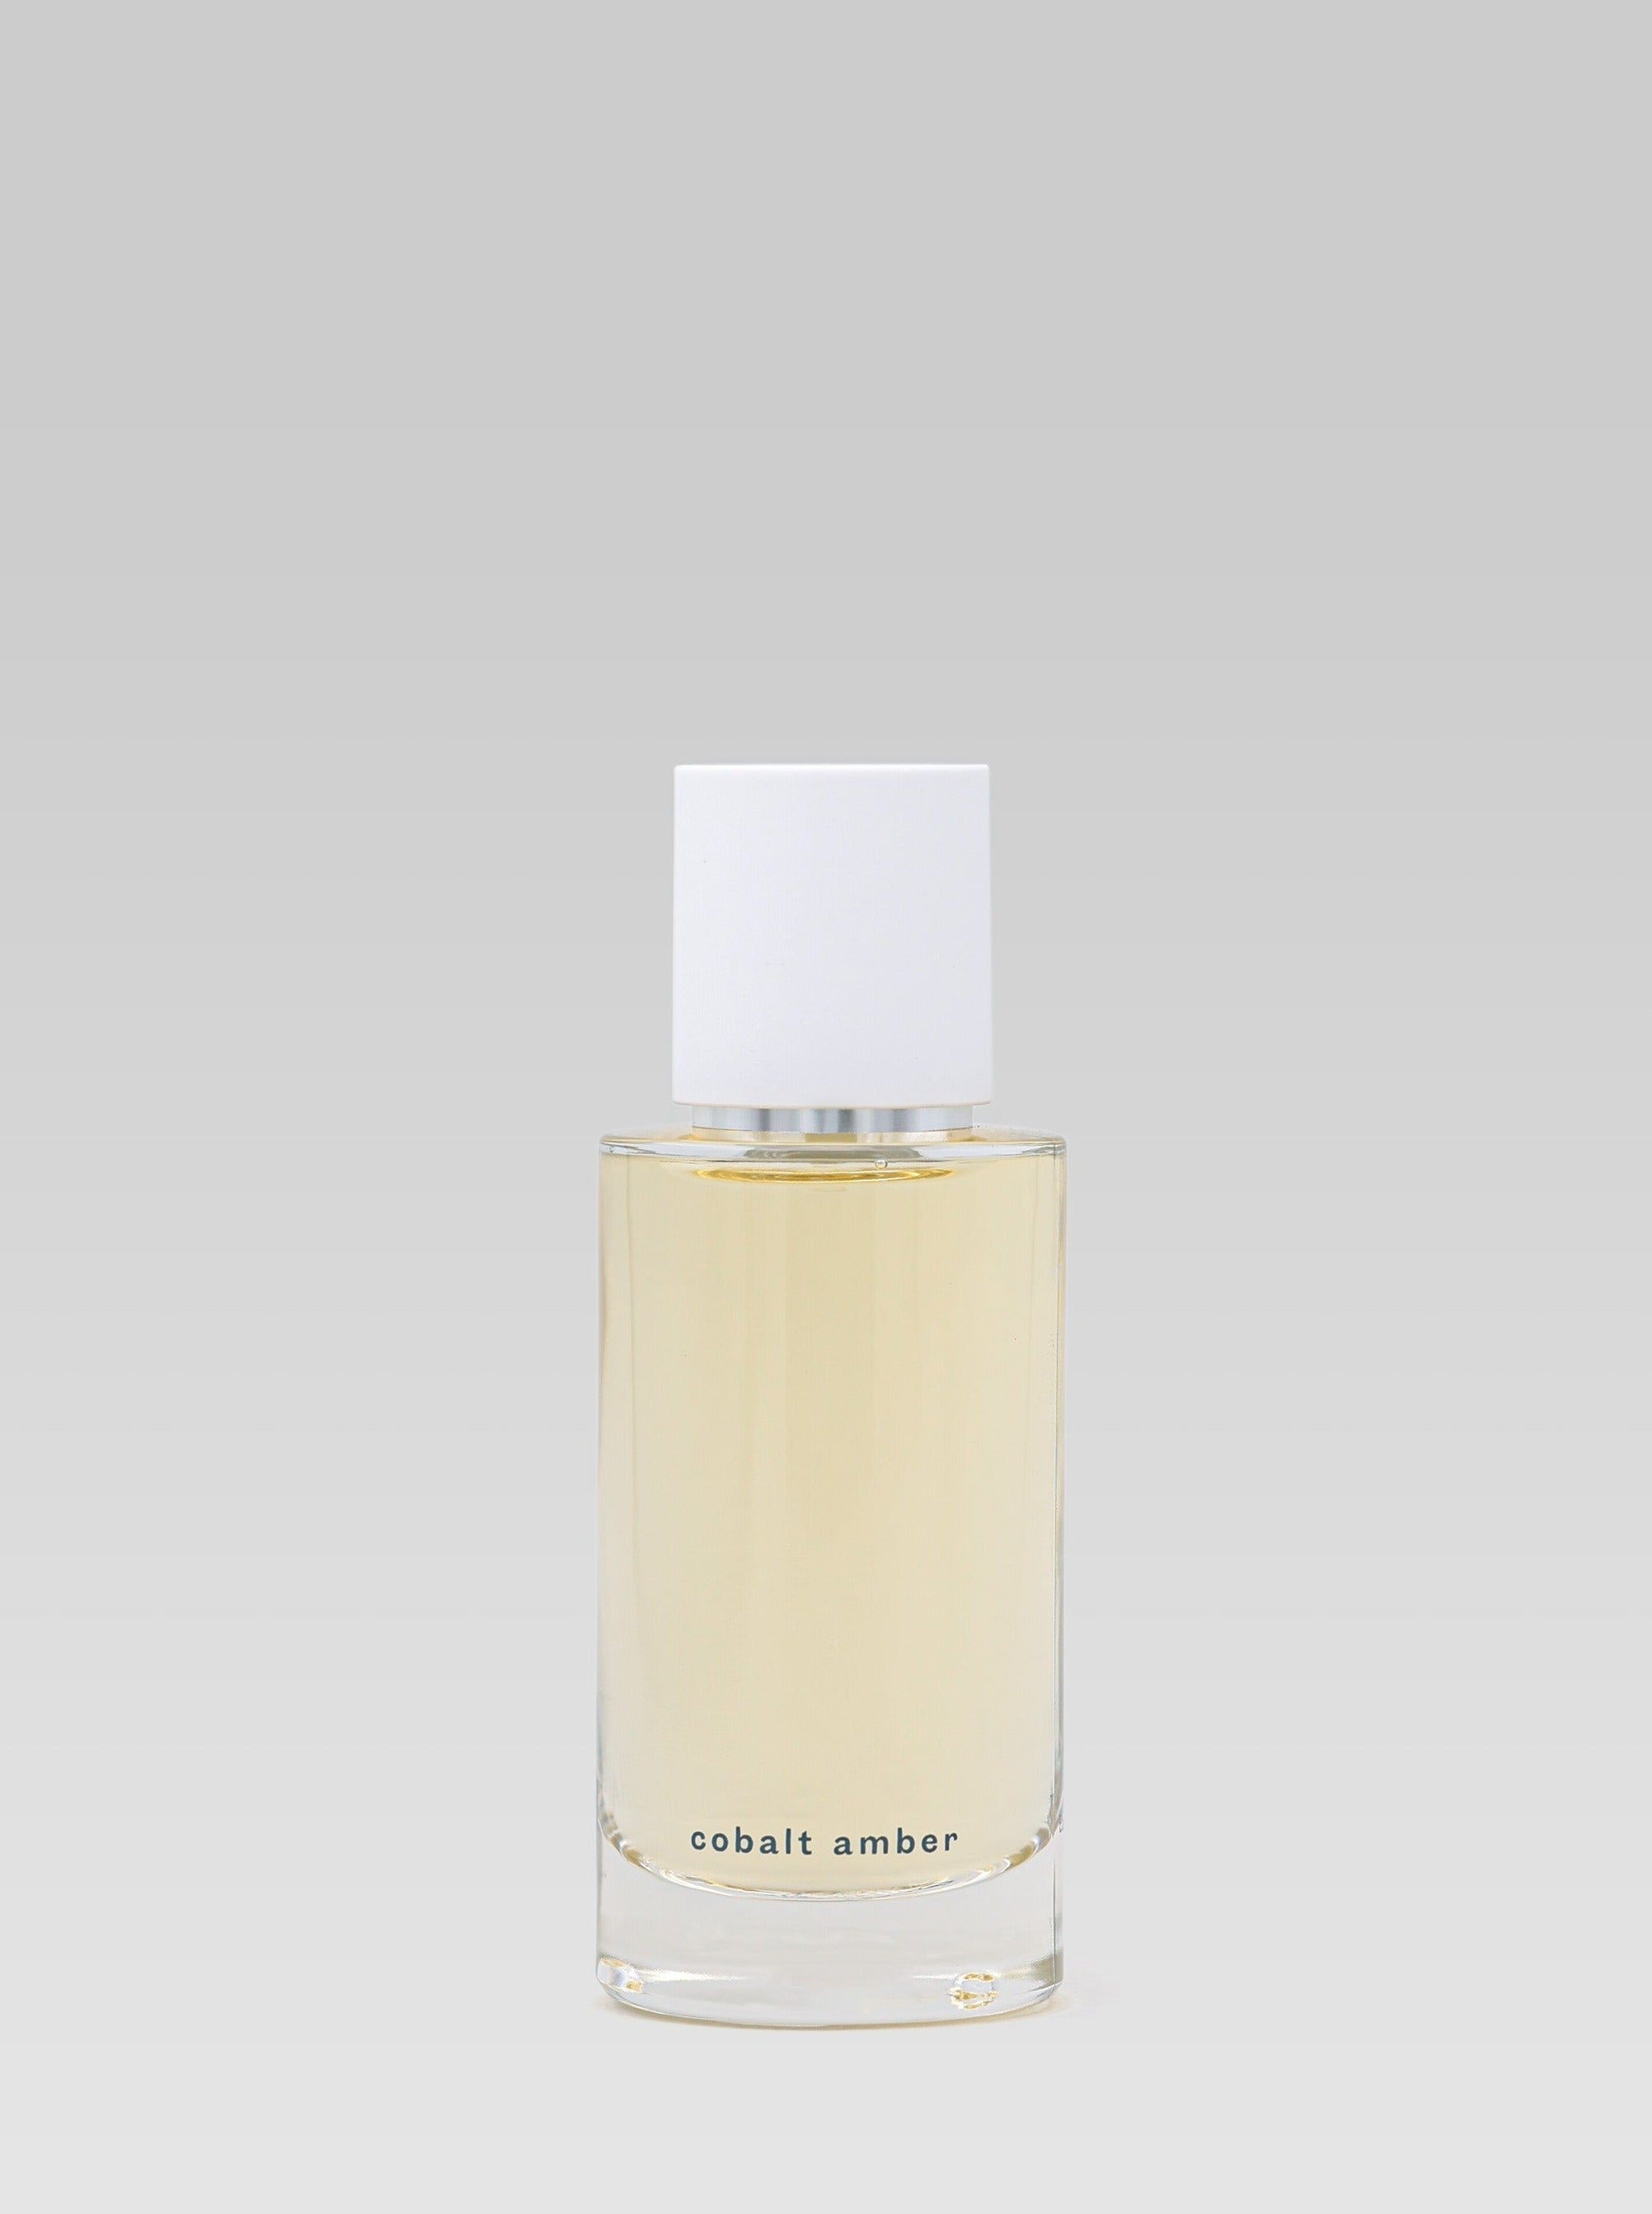 ABEL ODOR Parfum Cobalt Amber product shot